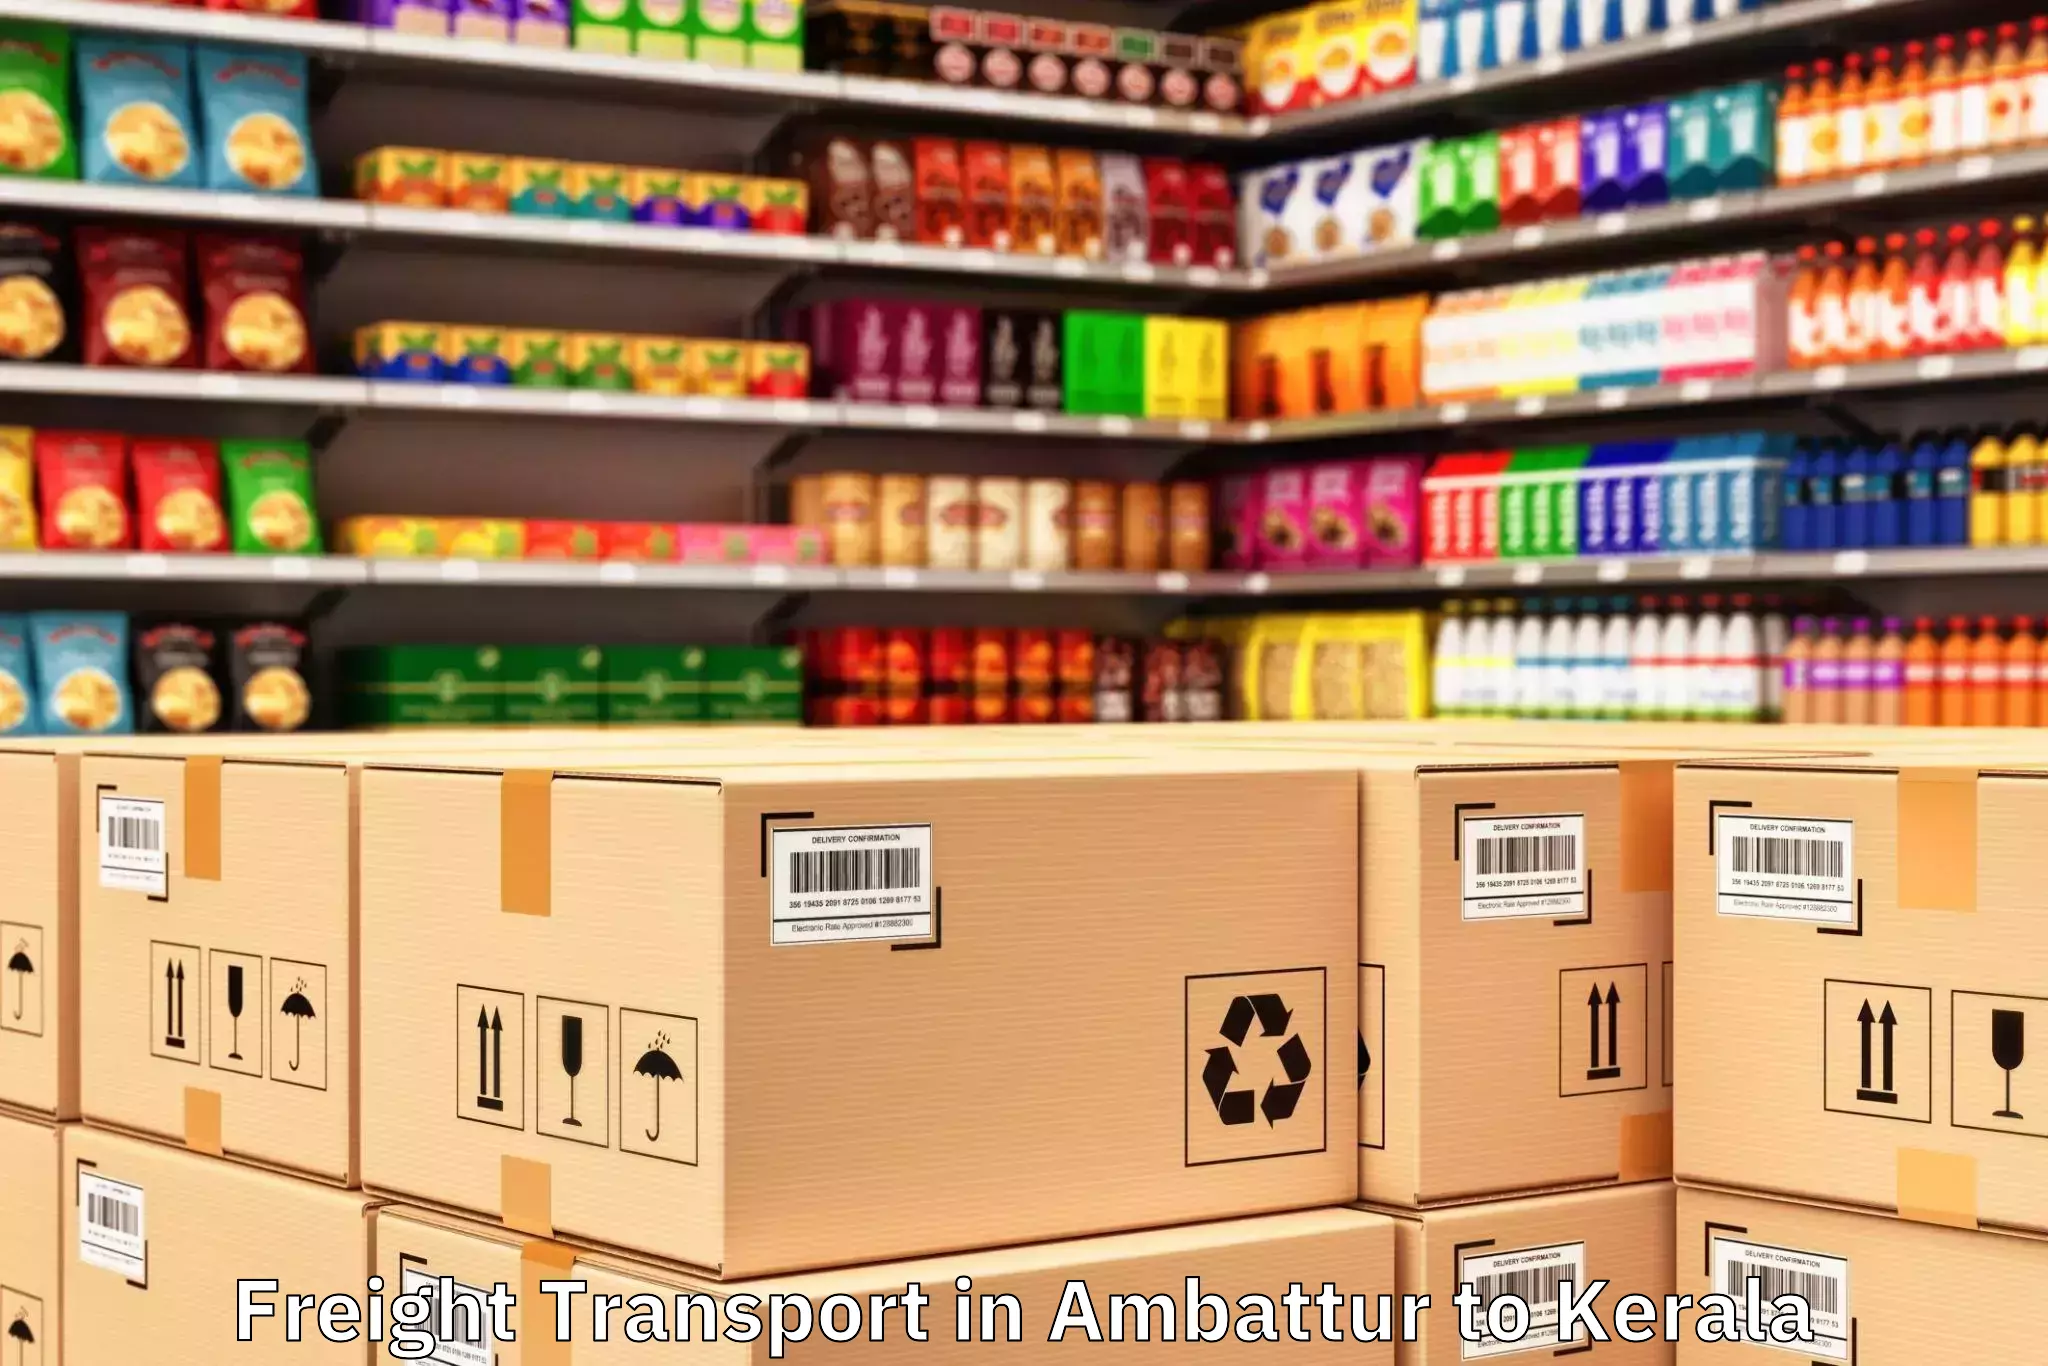 Professional Ambattur to Alathur Freight Transport